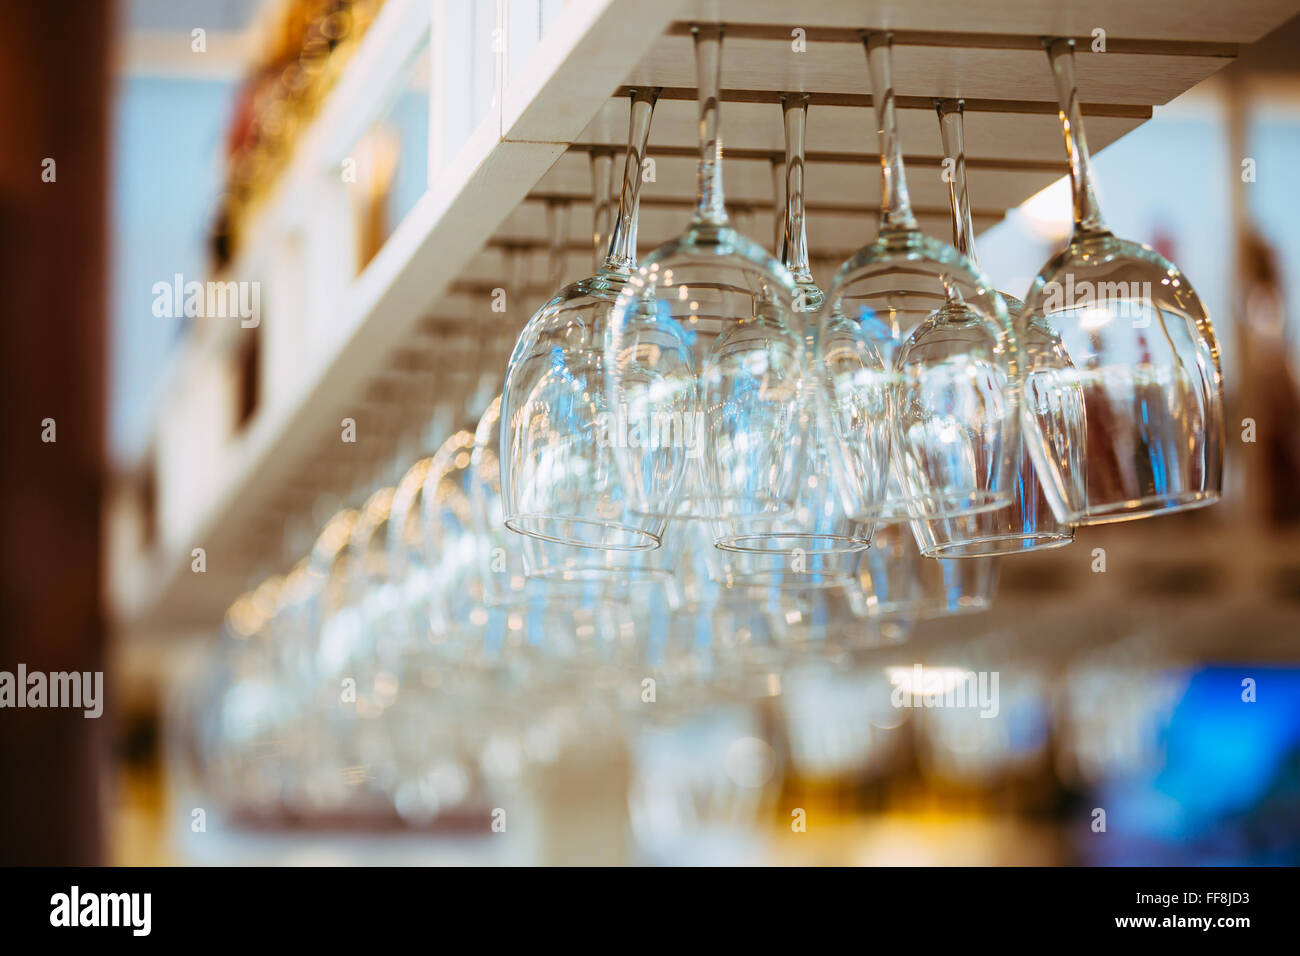 Glasses hanging over bar rack. Glasses for wine above a bar rack Stock Photo